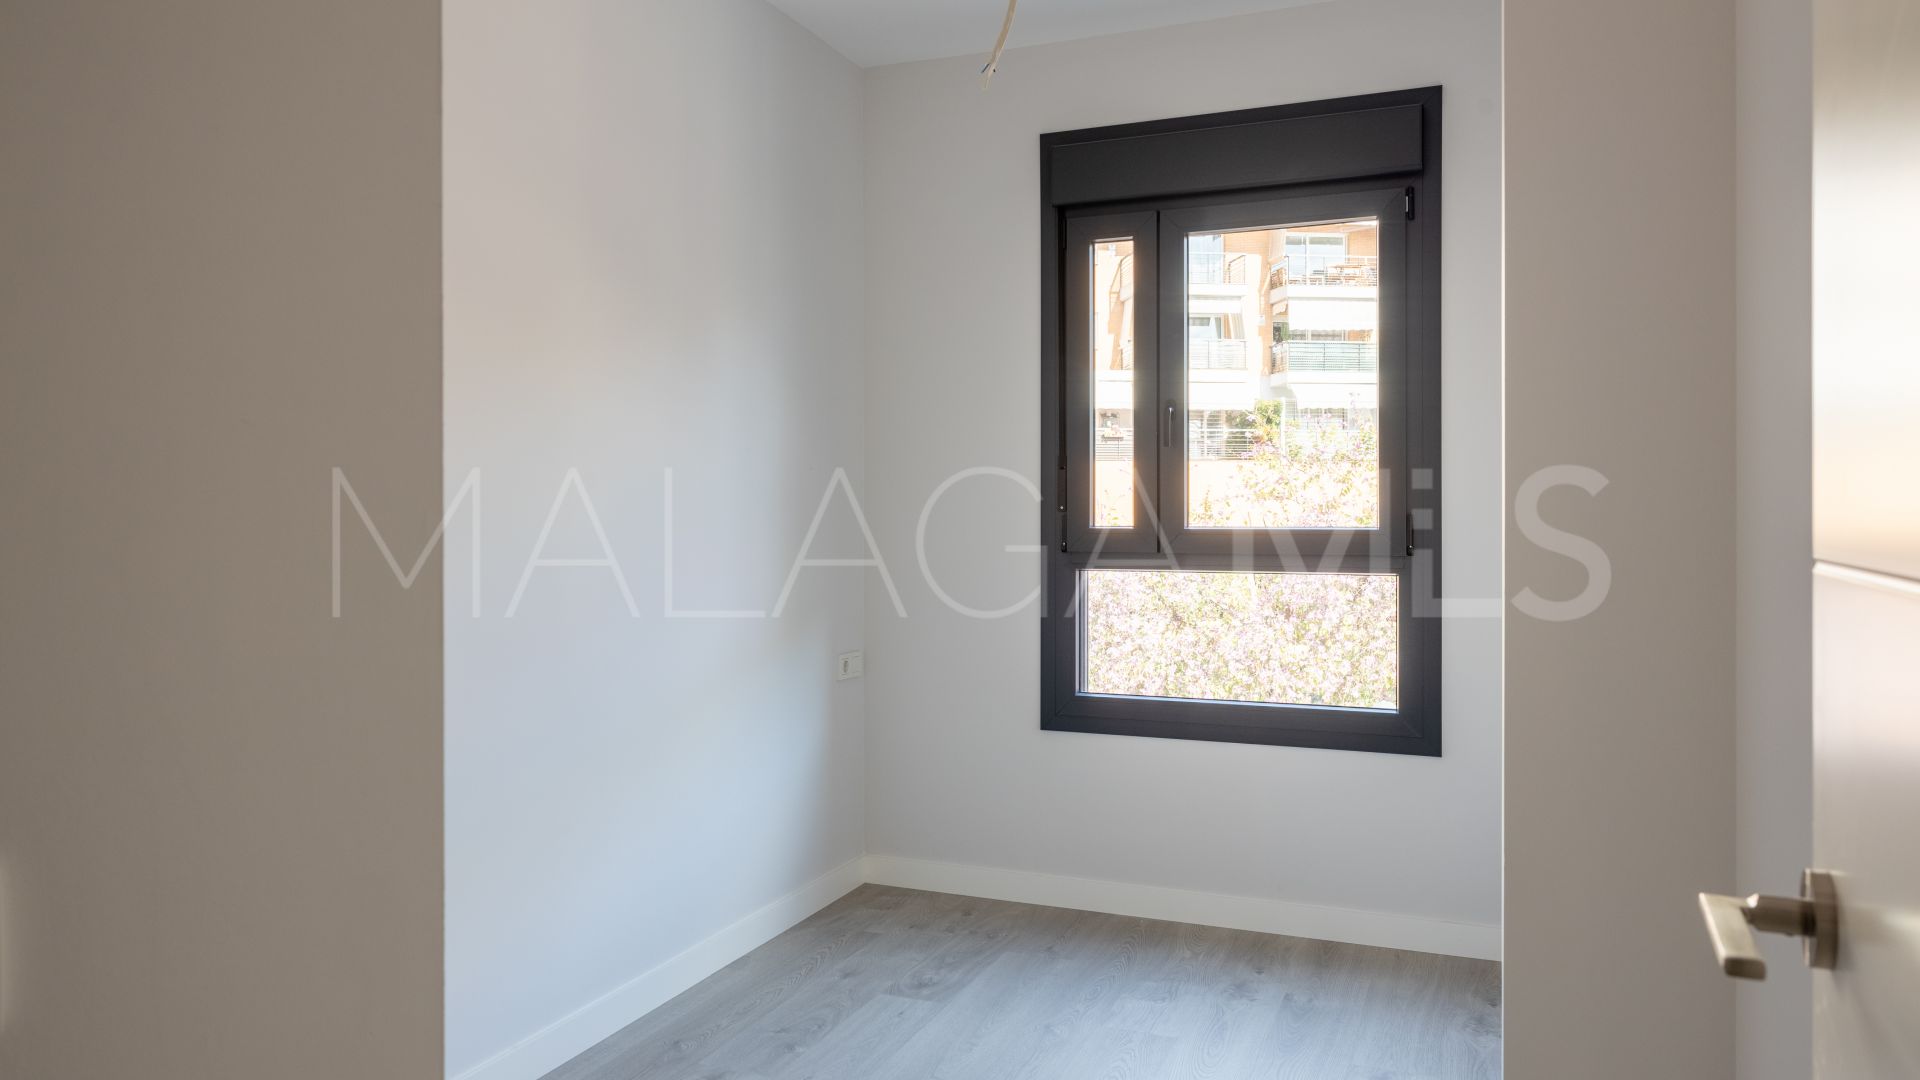 2 bedrooms apartment in La Malagueta - La Caleta for sale